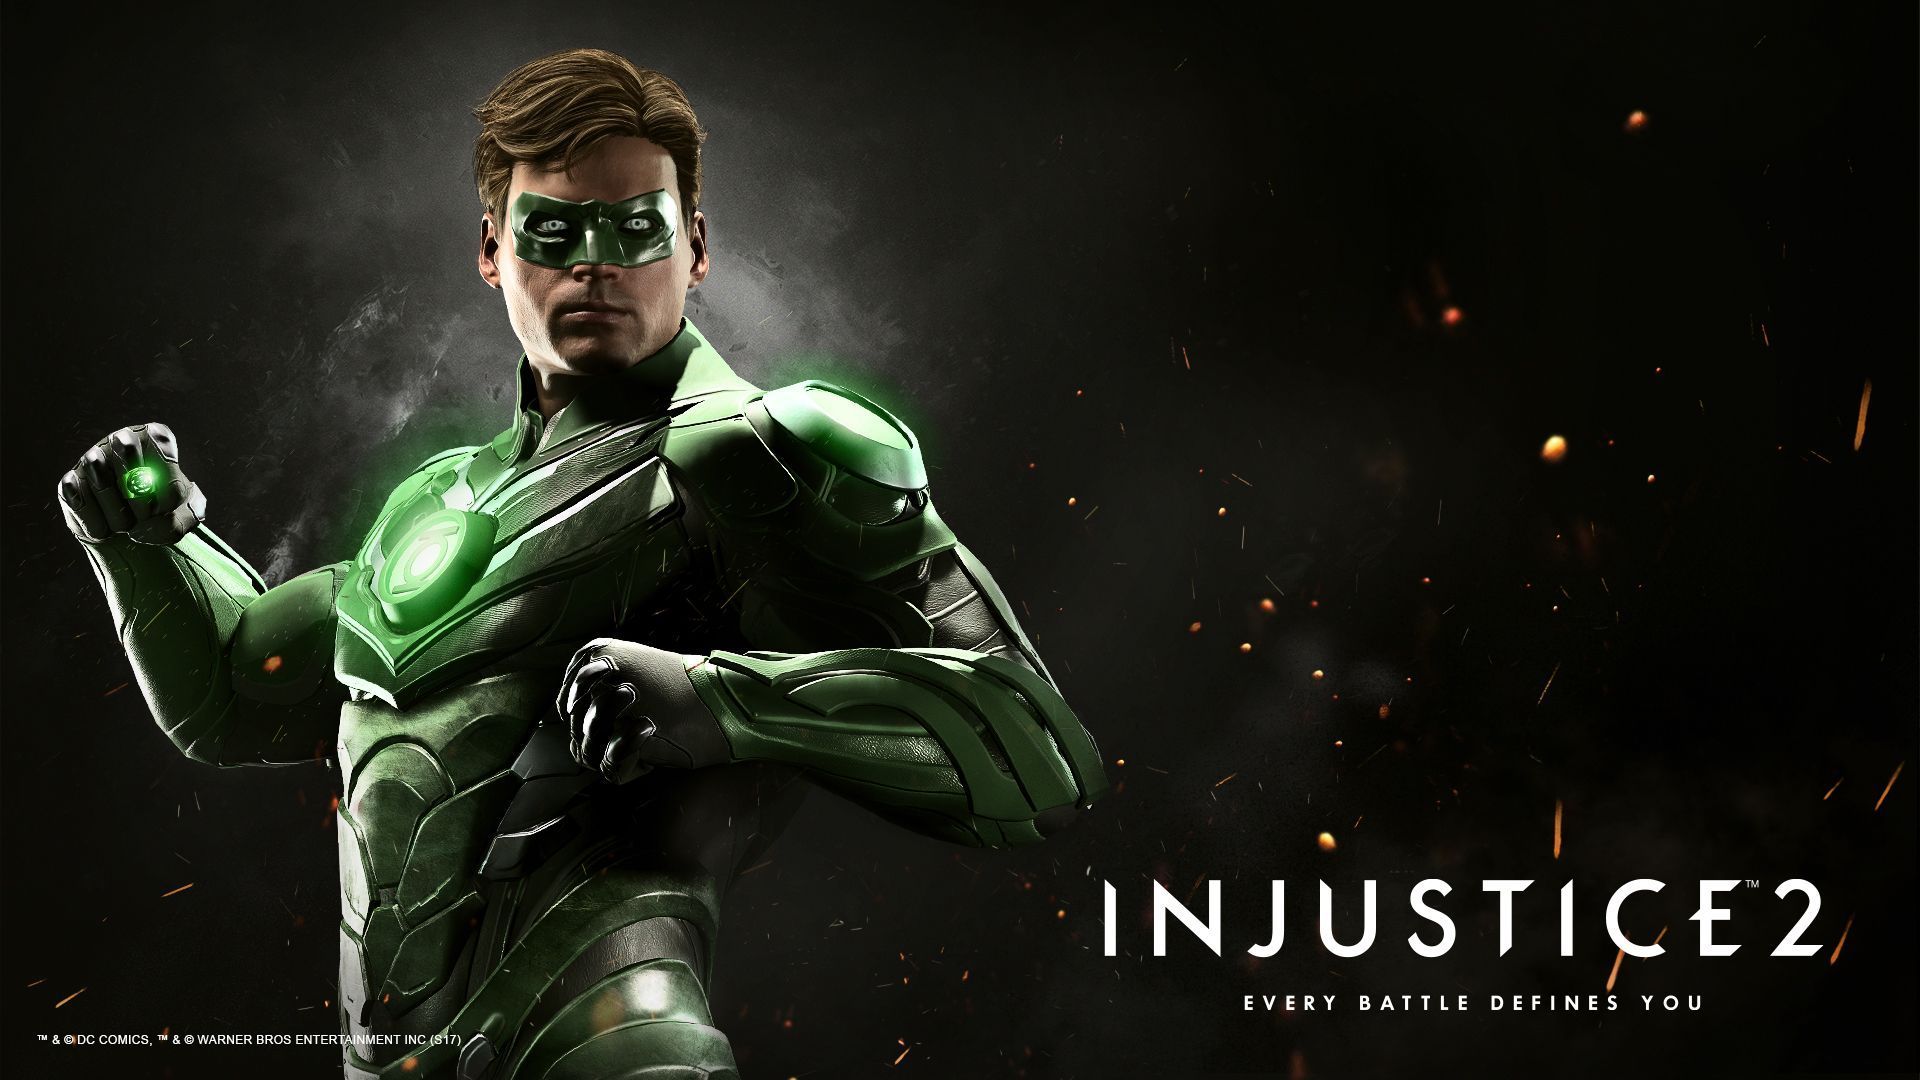 Green lantern, Injustice 2 .com